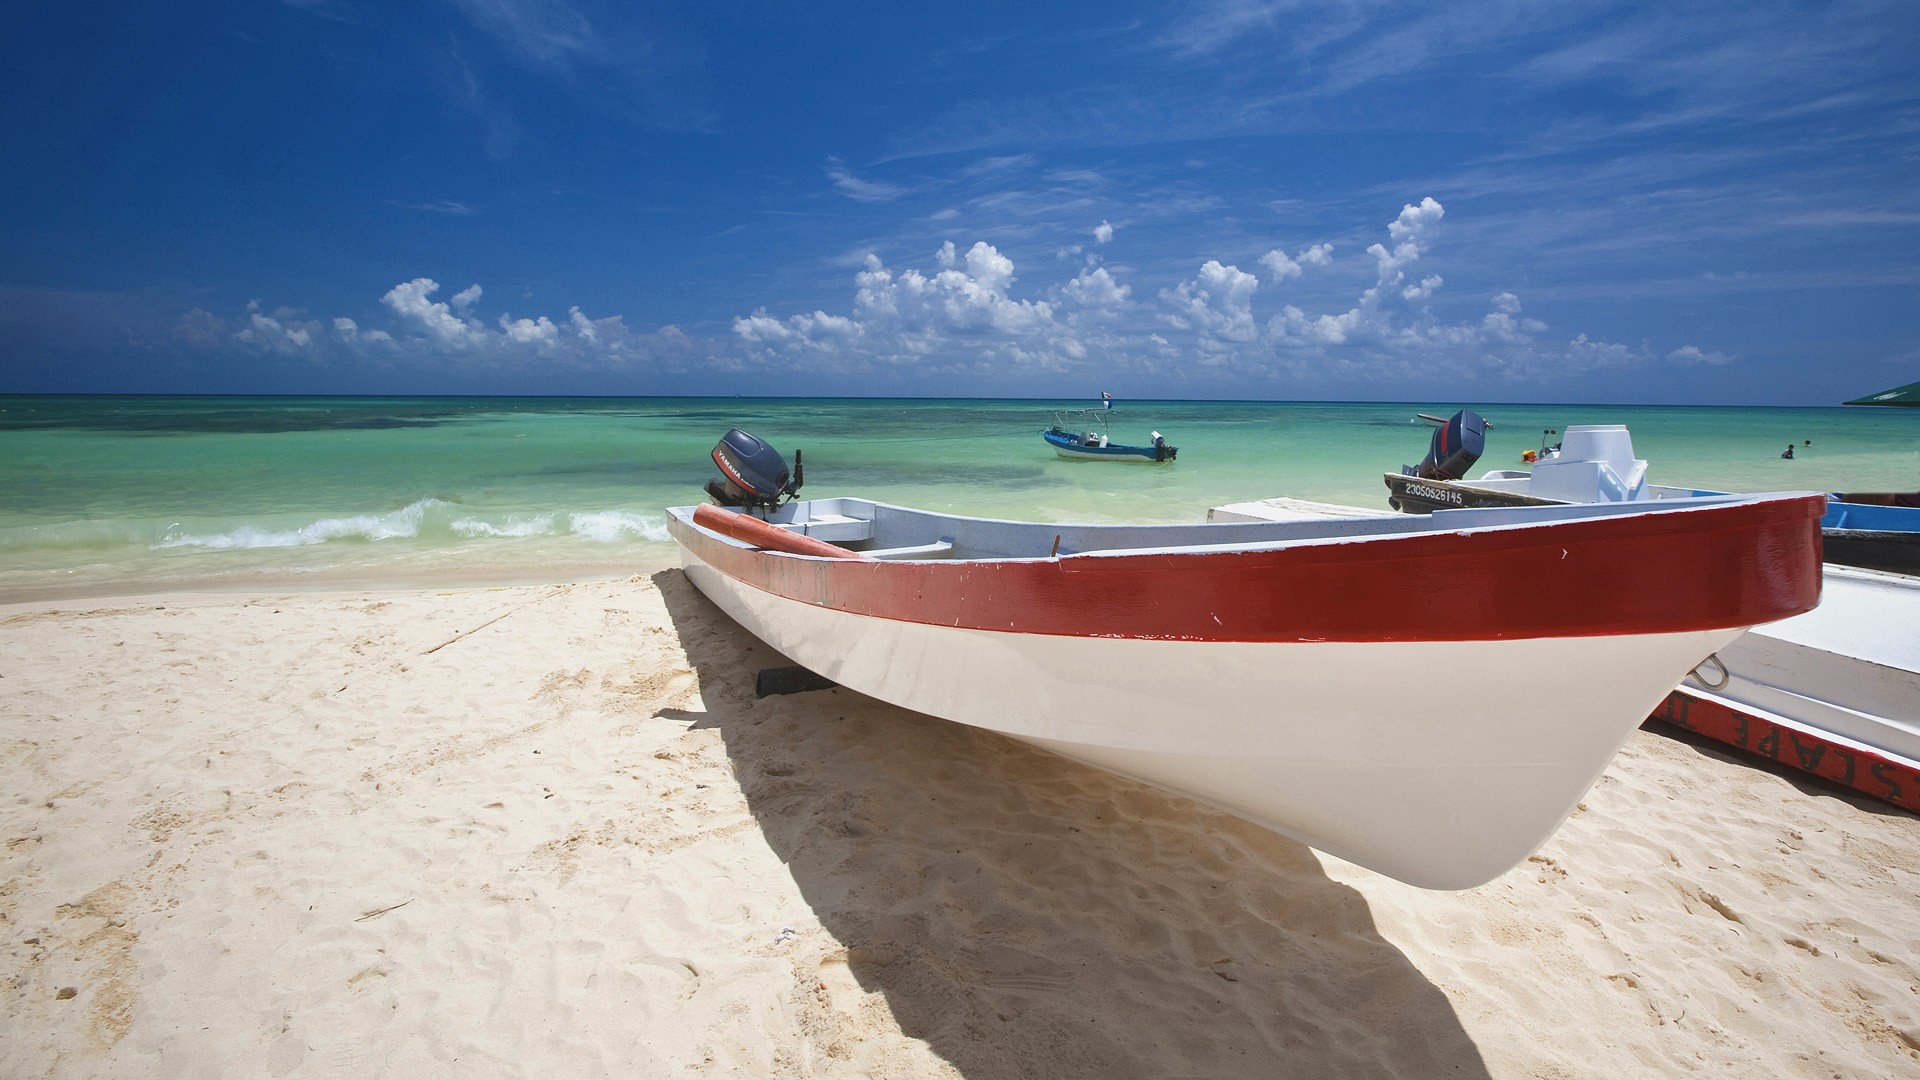 Mexico, boats, vehicles, beaches - desktop wallpaper